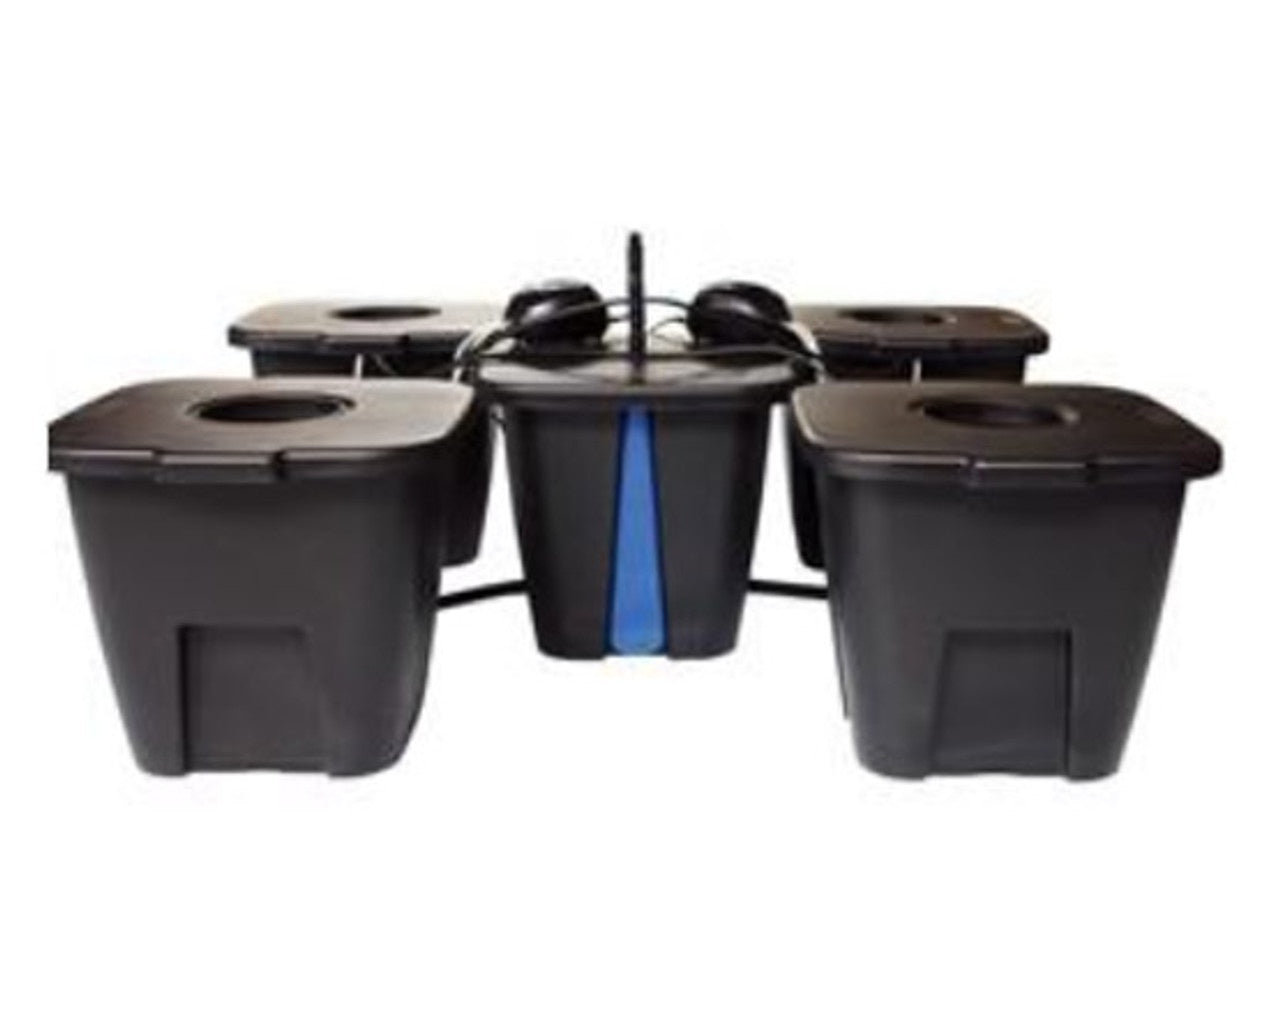 Aeros 4 Master System Unit (includes 2 x 7500 air pump & 1 x 102 water pump)